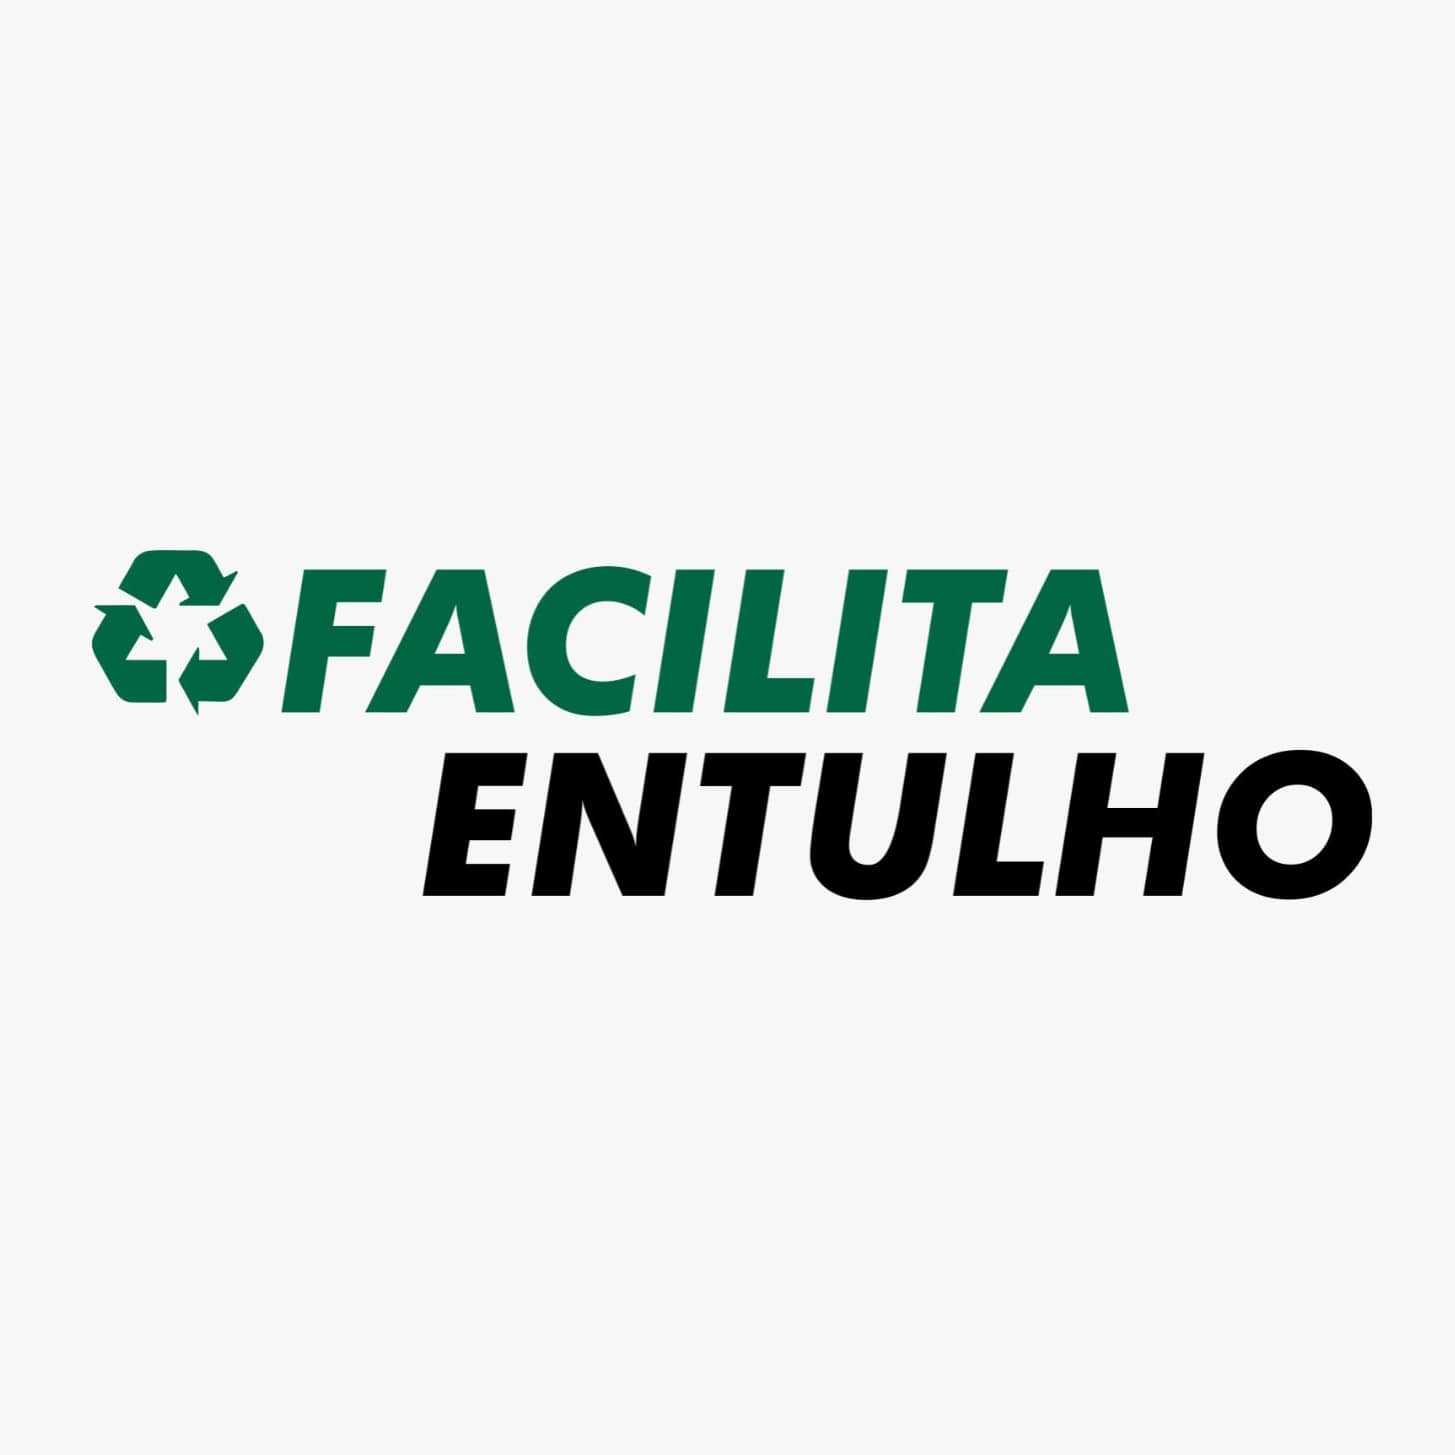 Facilita Entulho - Caçamba Joinville